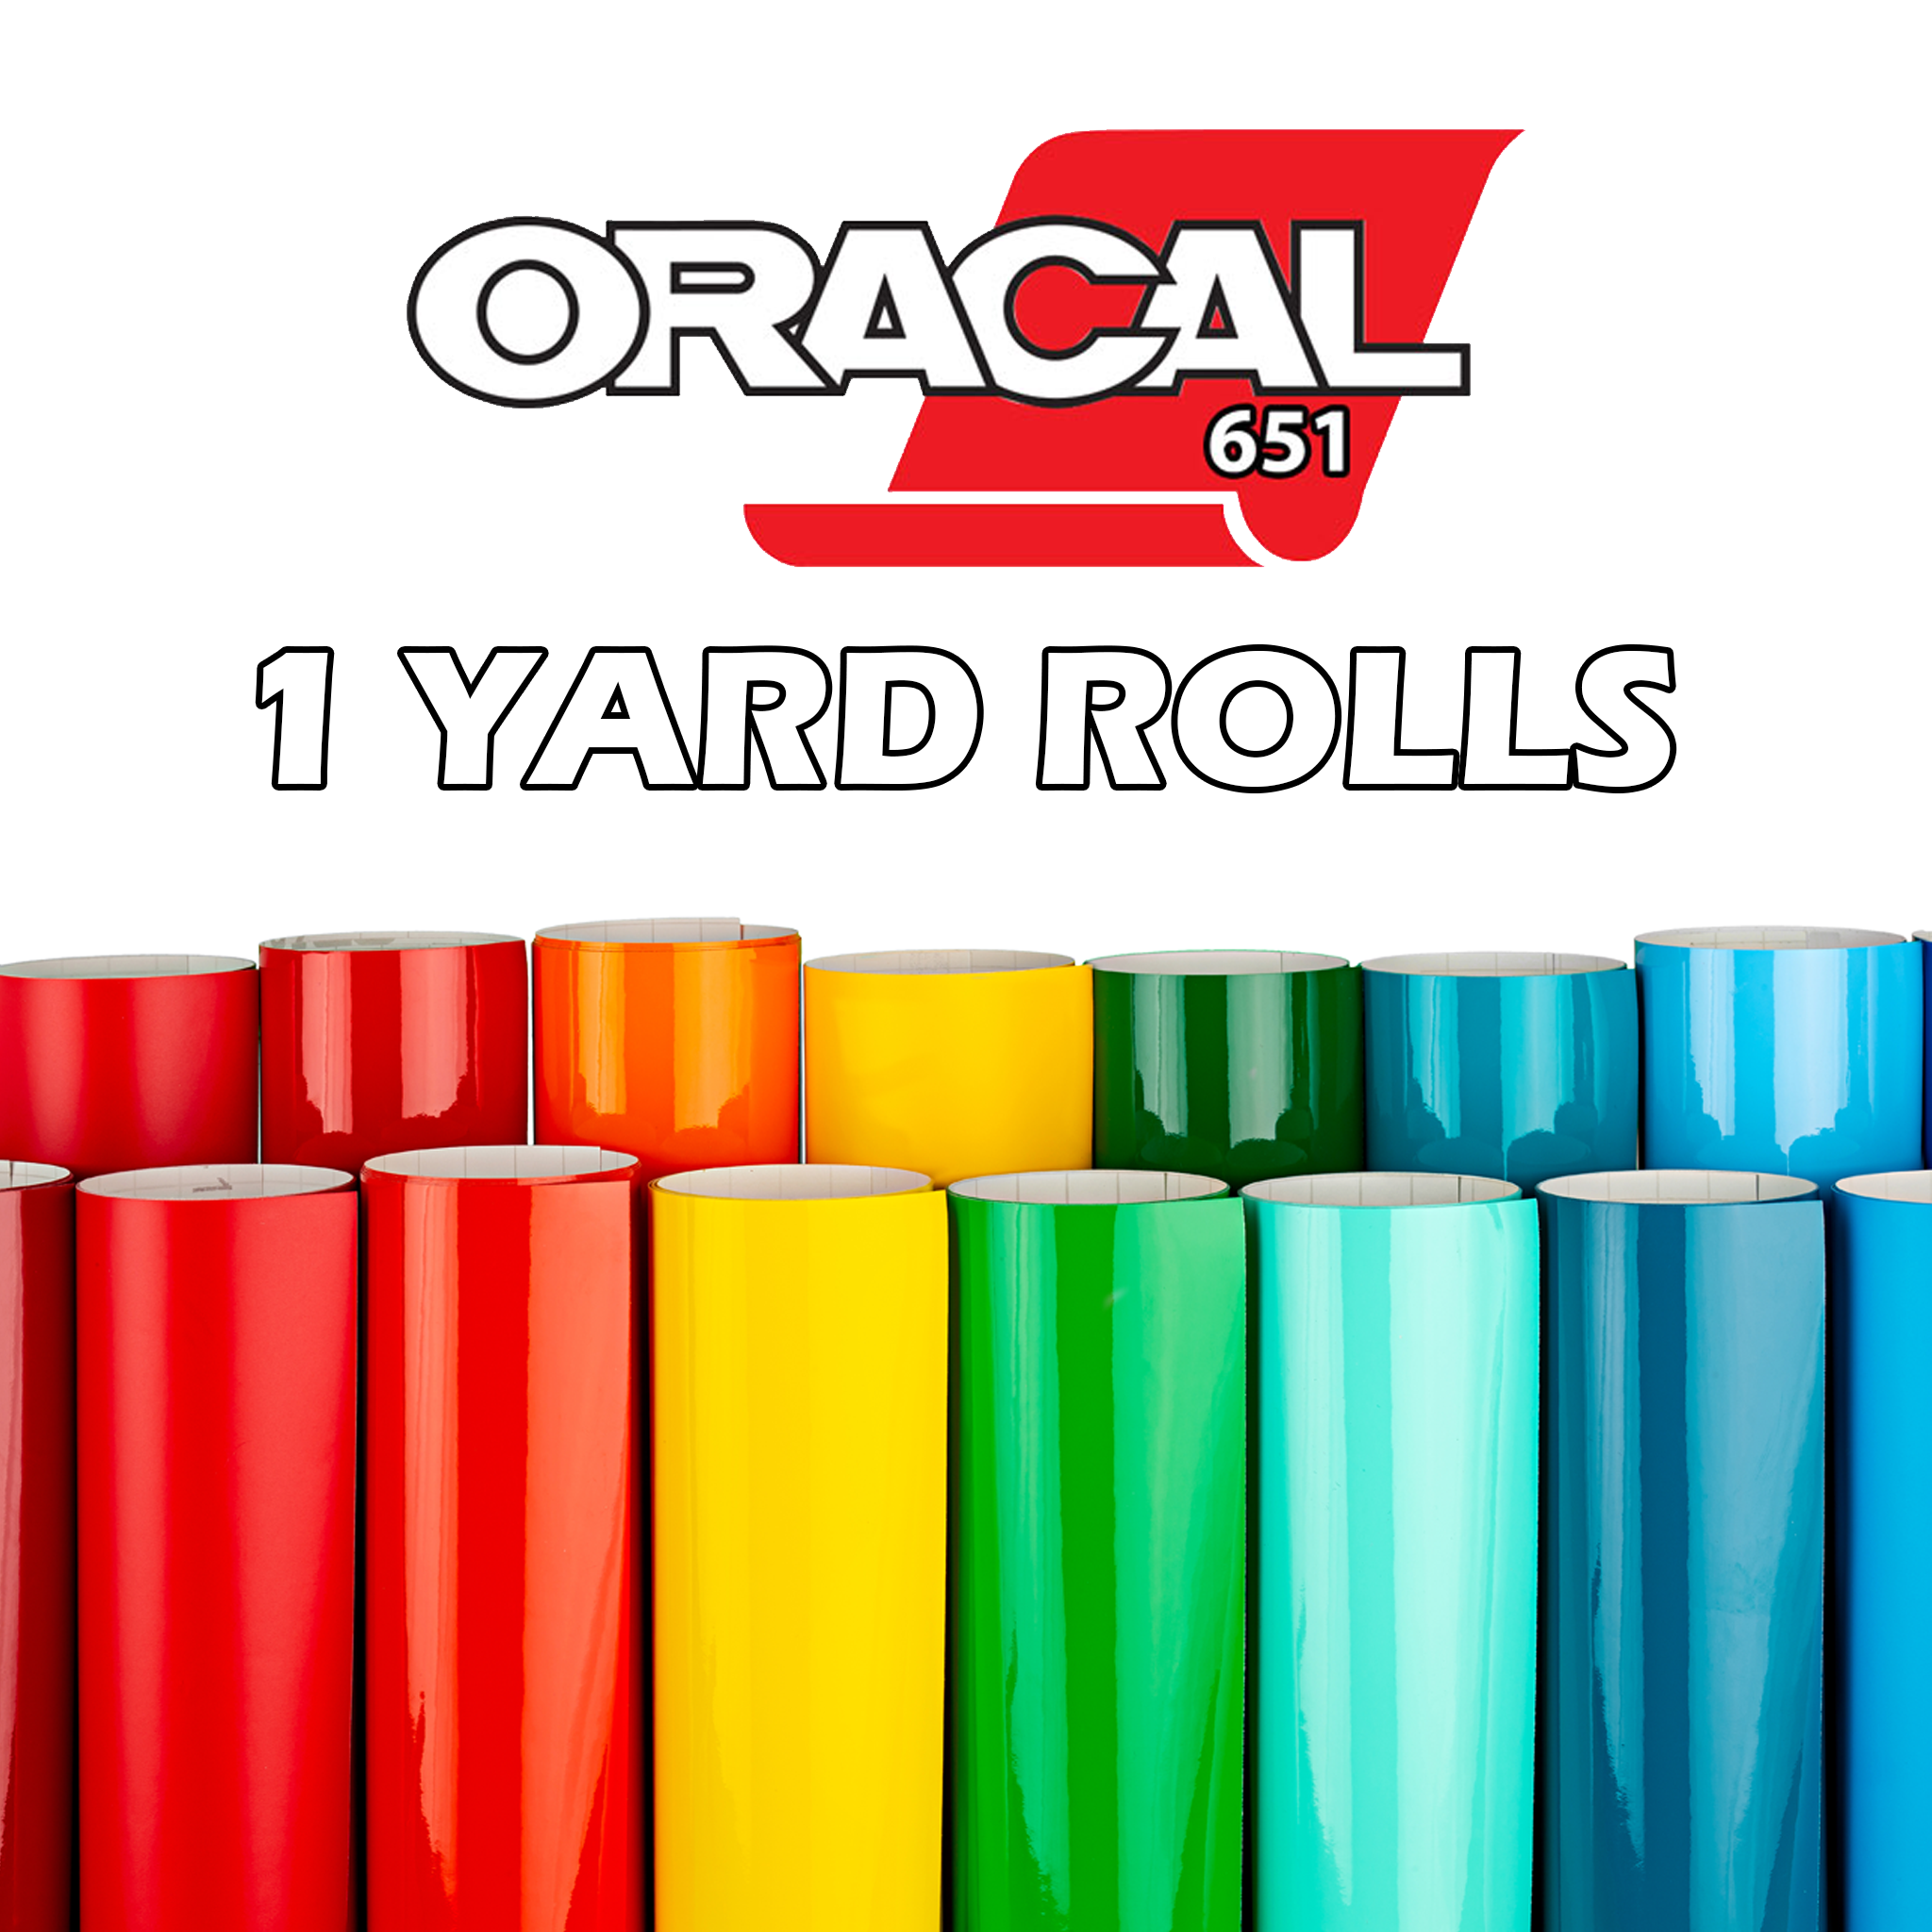 Oracal 651 Intermediate Adhesive Vinyl 15 Roll (Yard)